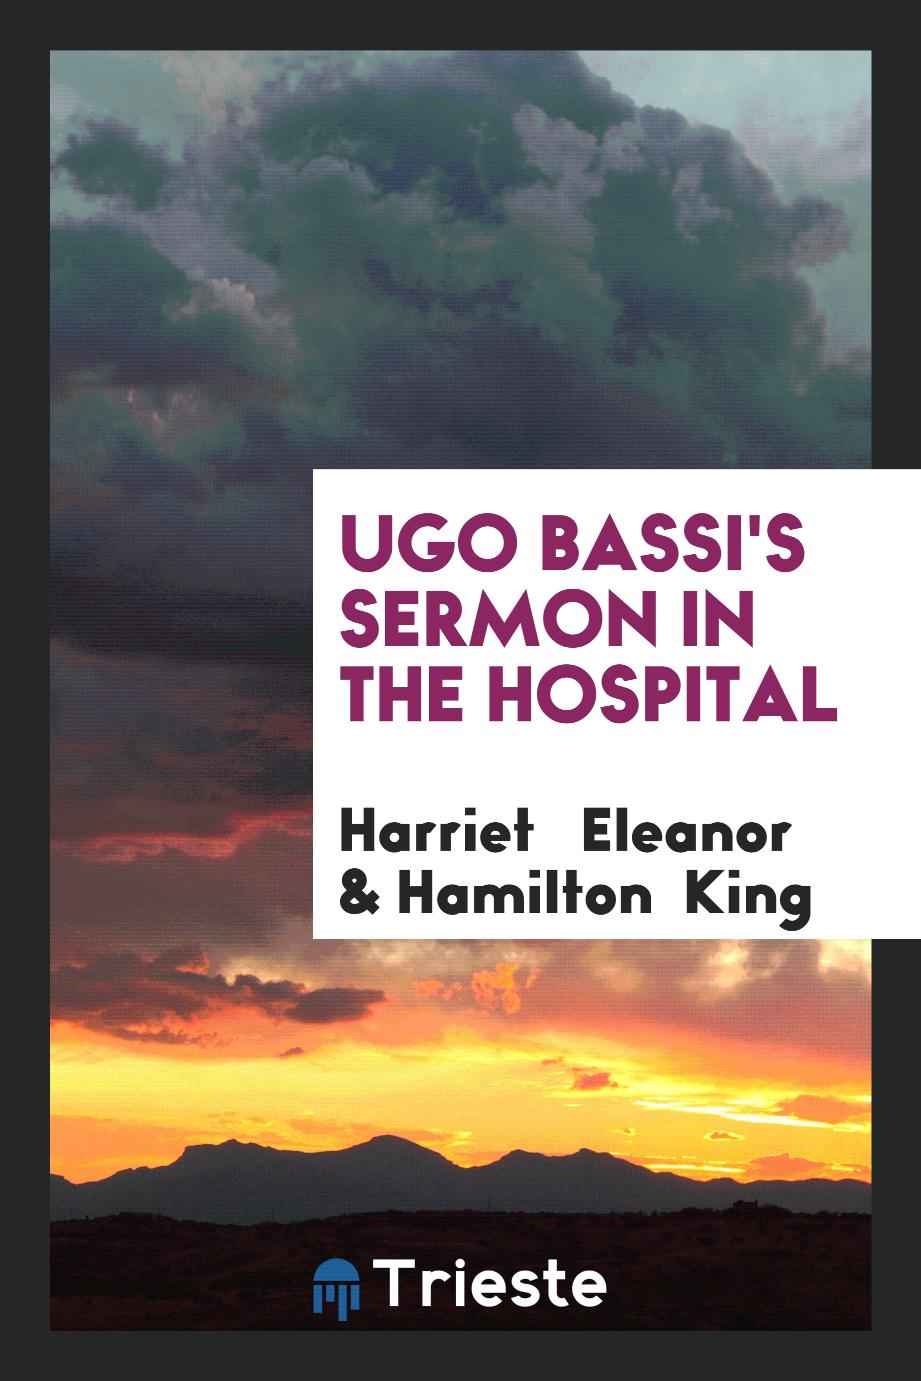 Ugo Bassi's Sermon in the Hospital